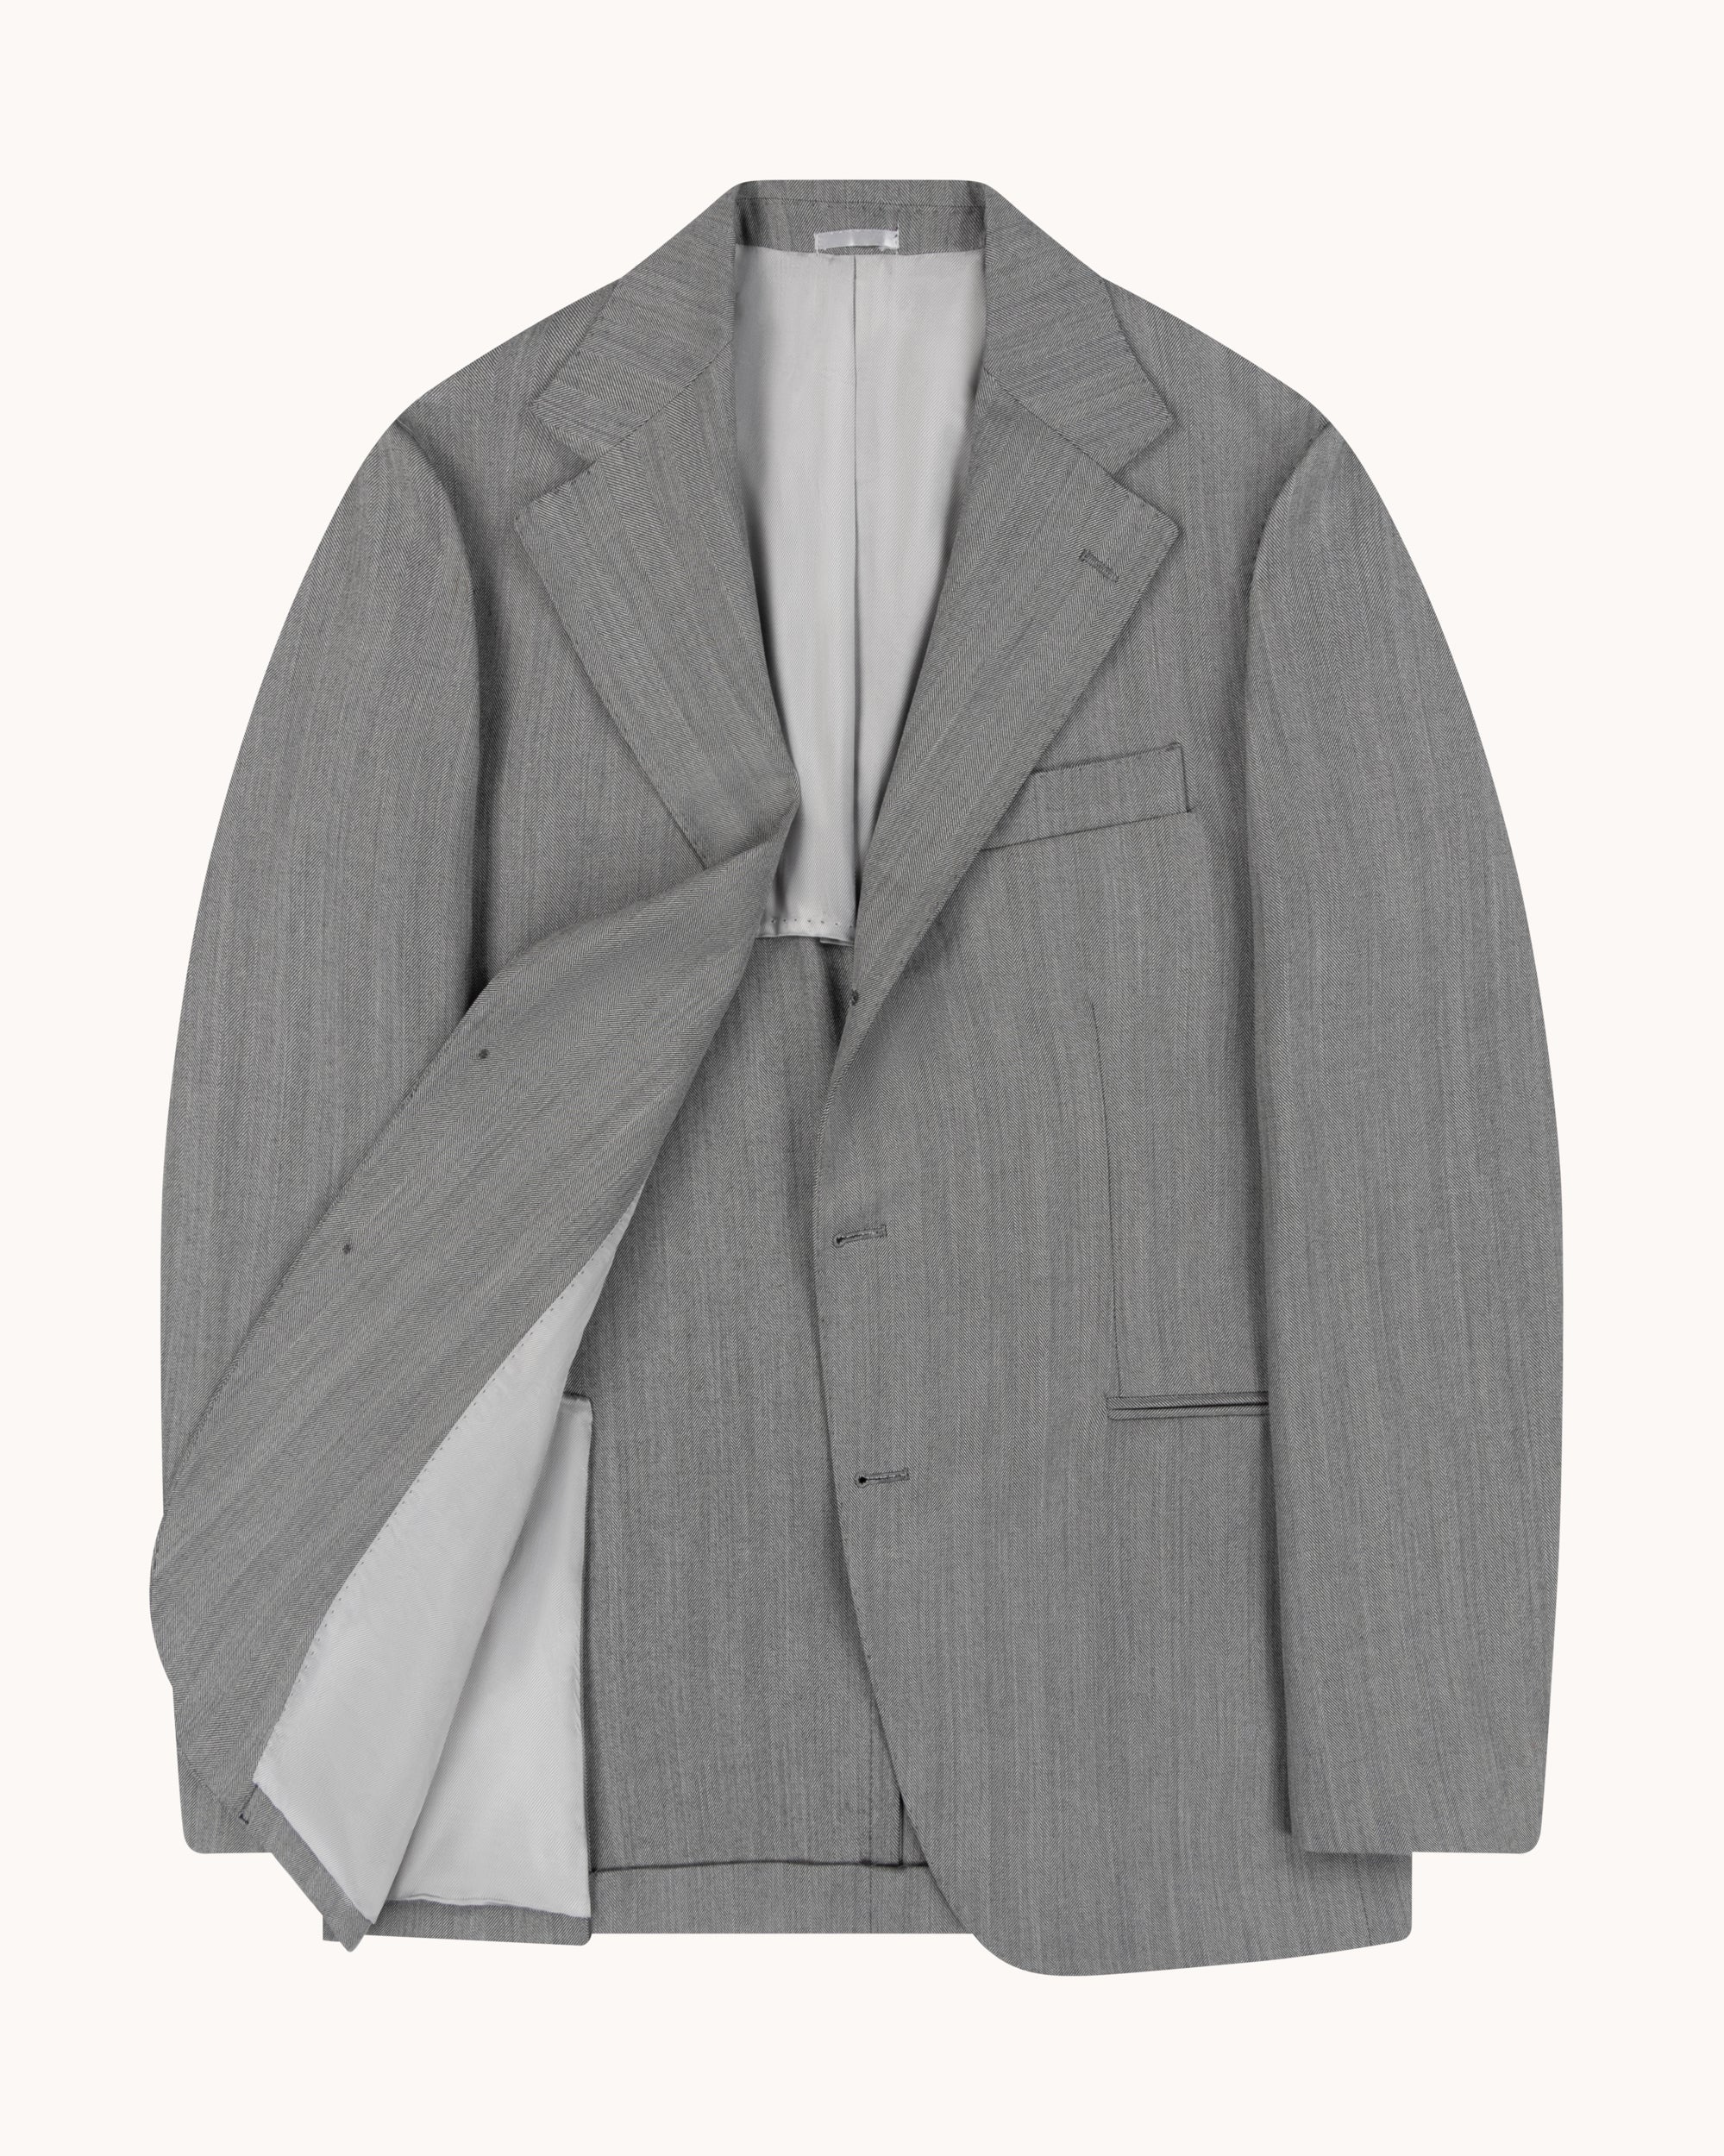 Sport Jacket - Light Grey Herringbone Wool